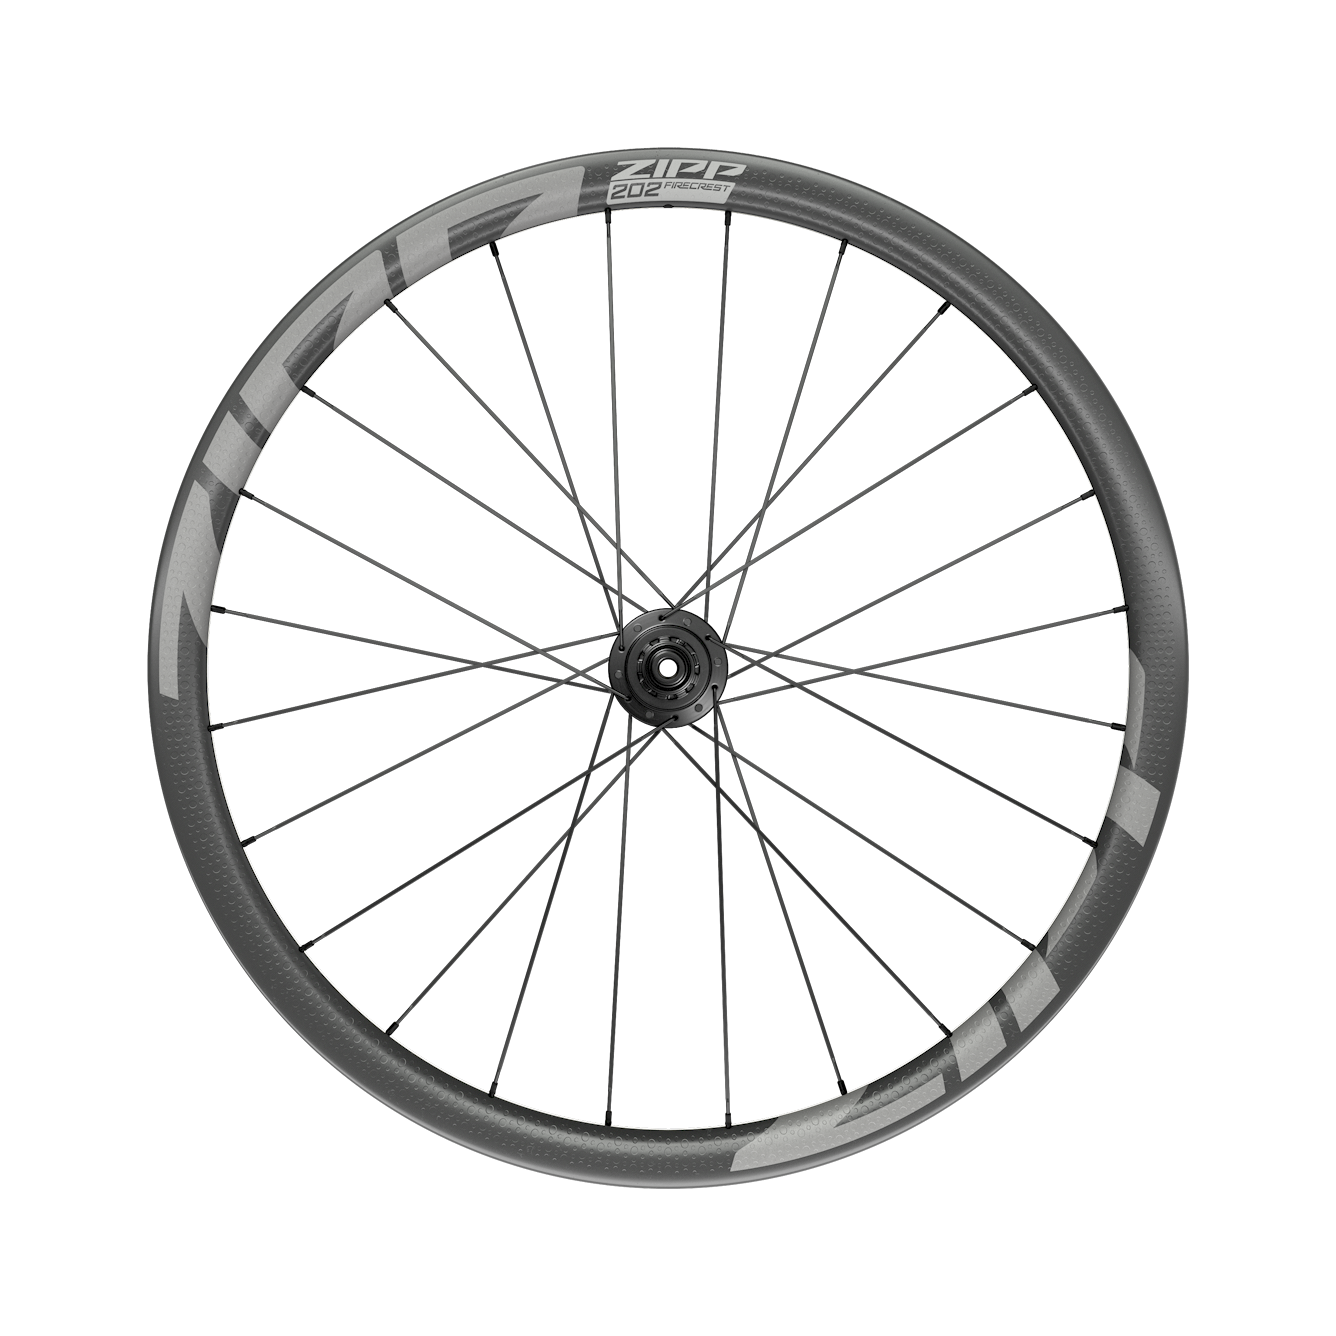 zipp triathlon wheels